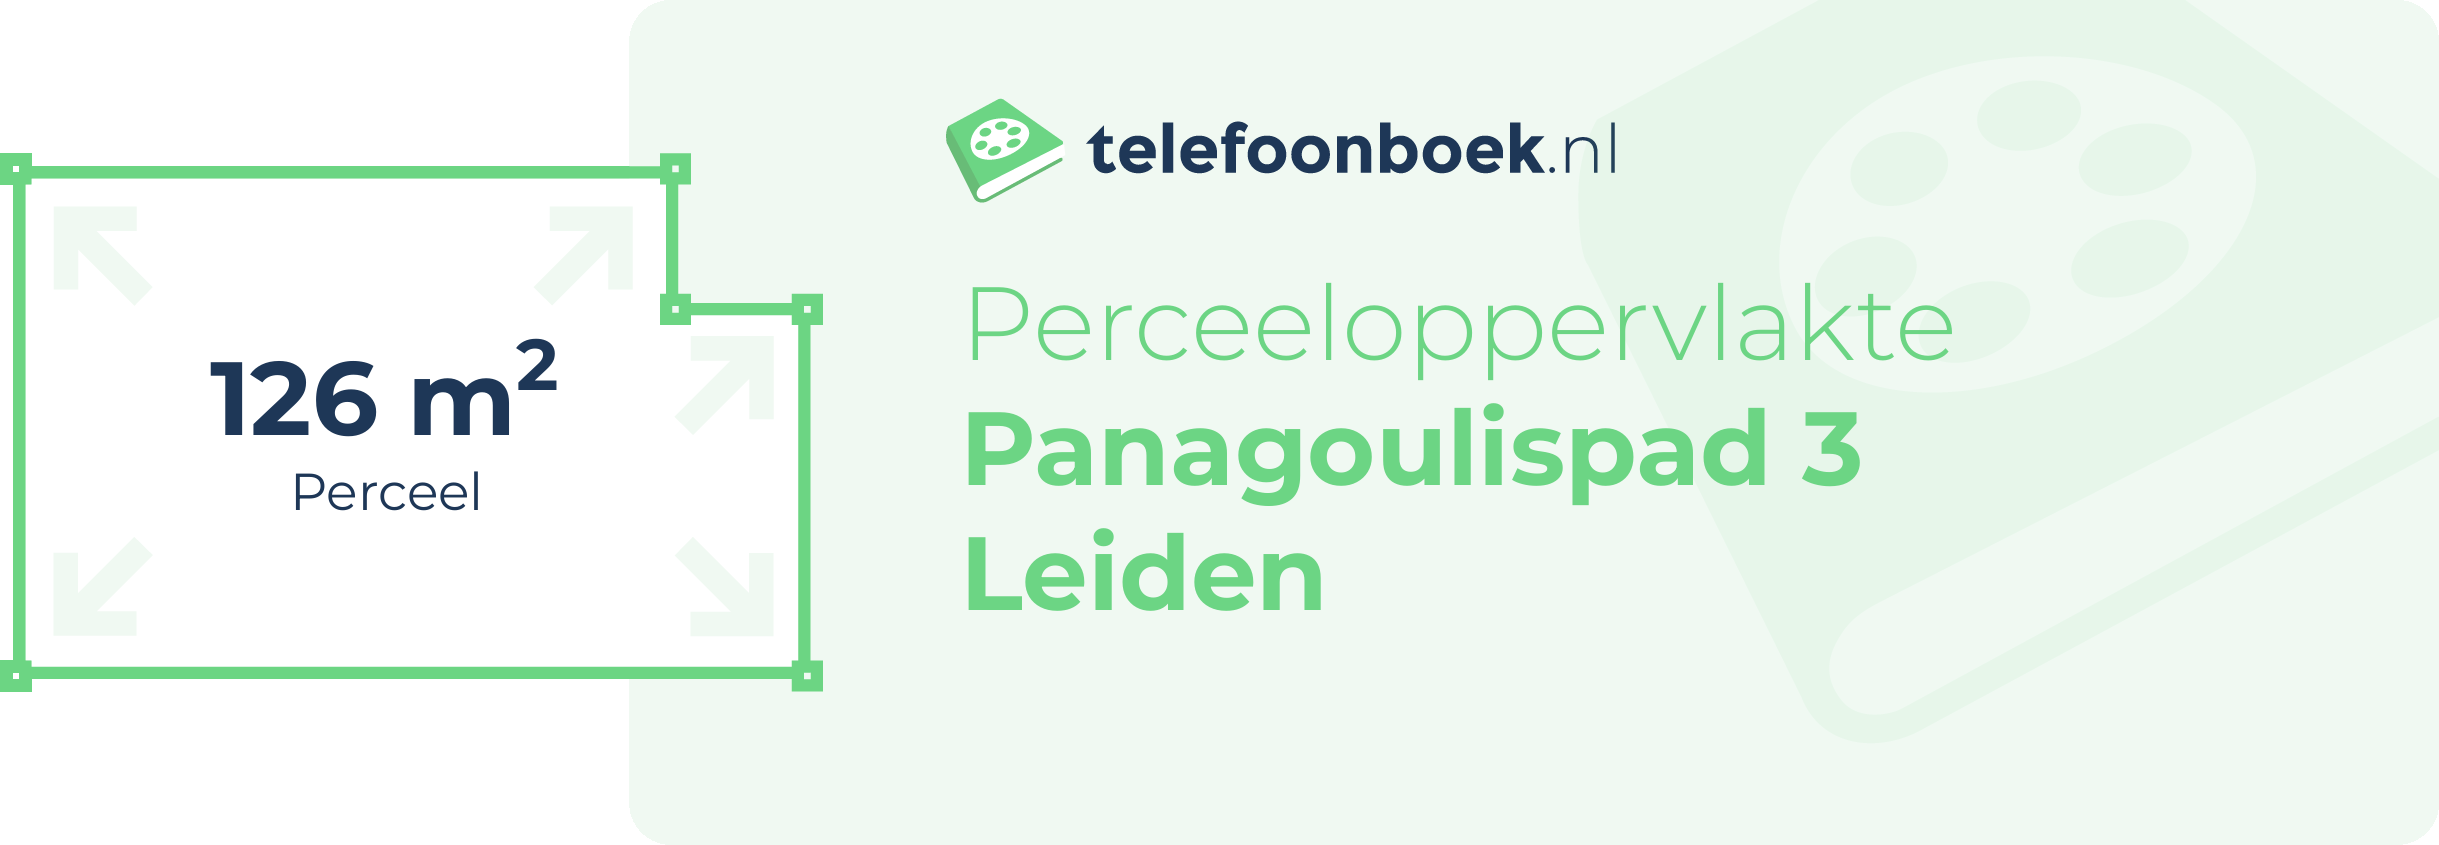 Perceeloppervlakte Panagoulispad 3 Leiden